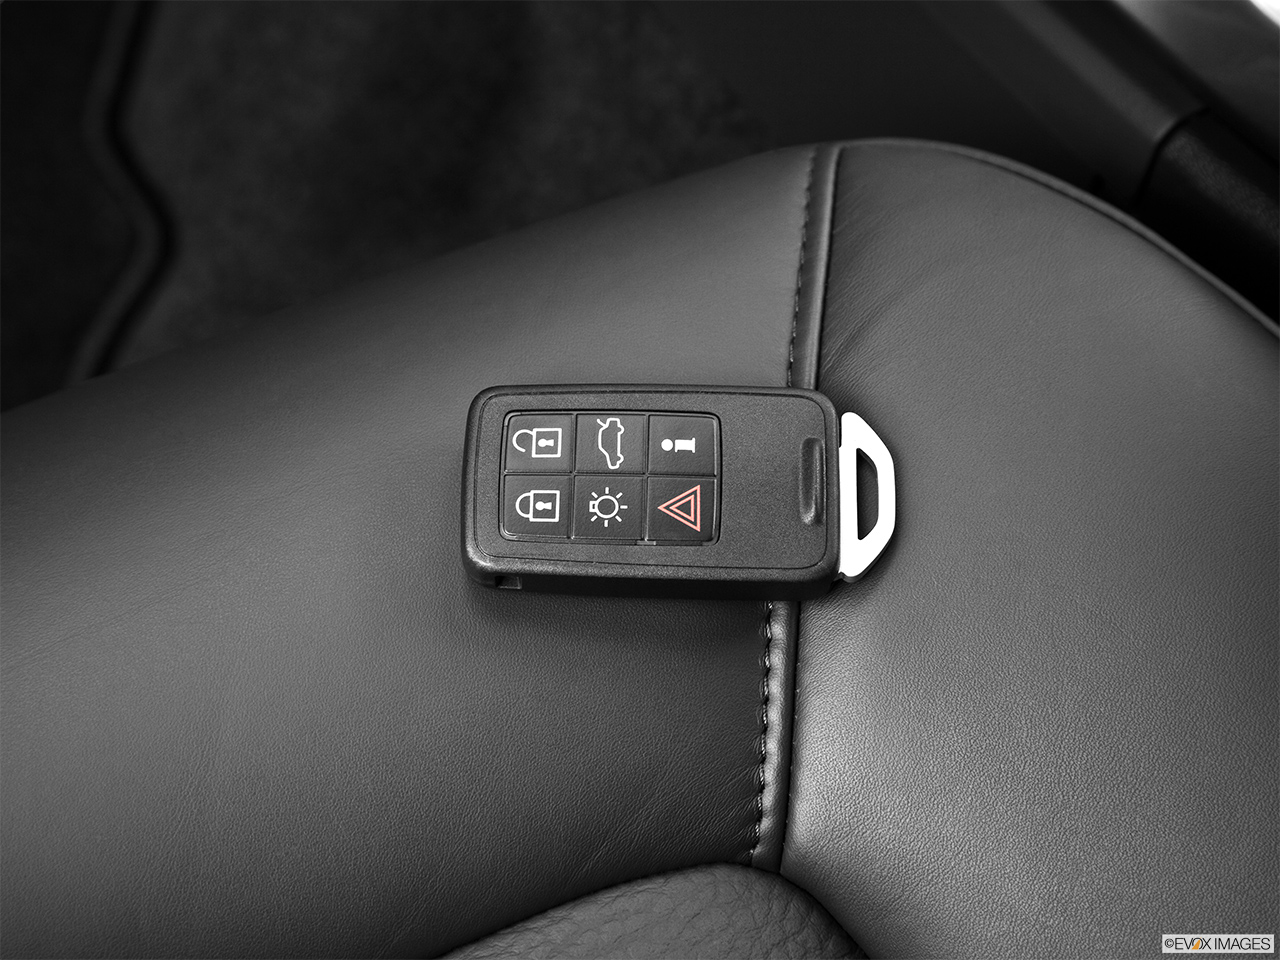 2013 Volvo S80 3.2 Platinum Key fob on driver's seat. 